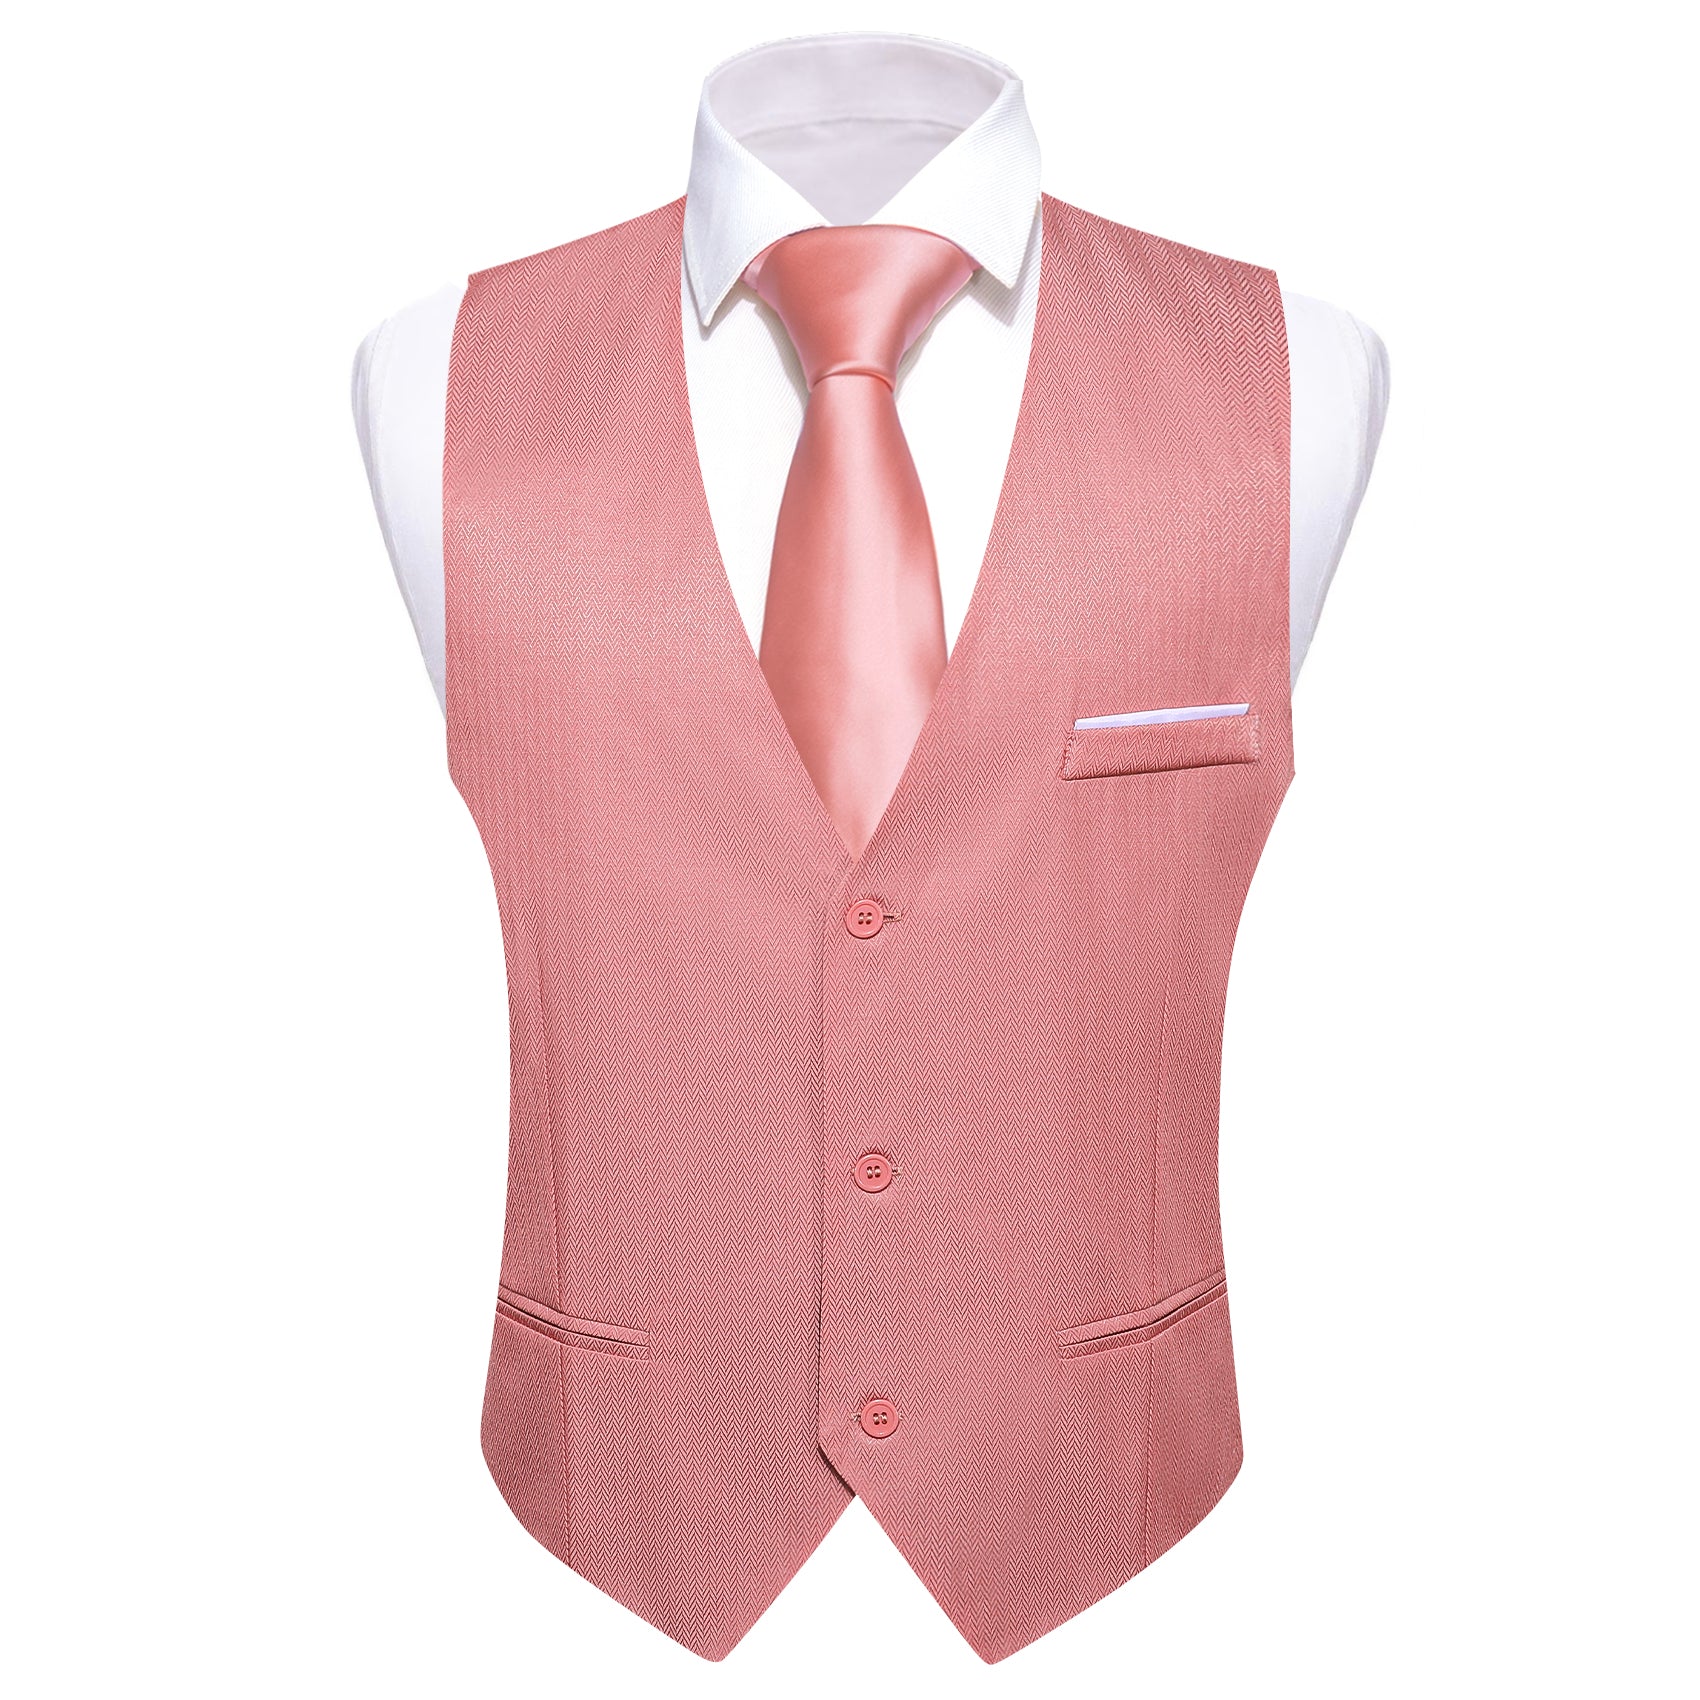 Barry.wang Men's Work Vest Light Red Solid Vest Suit for Business